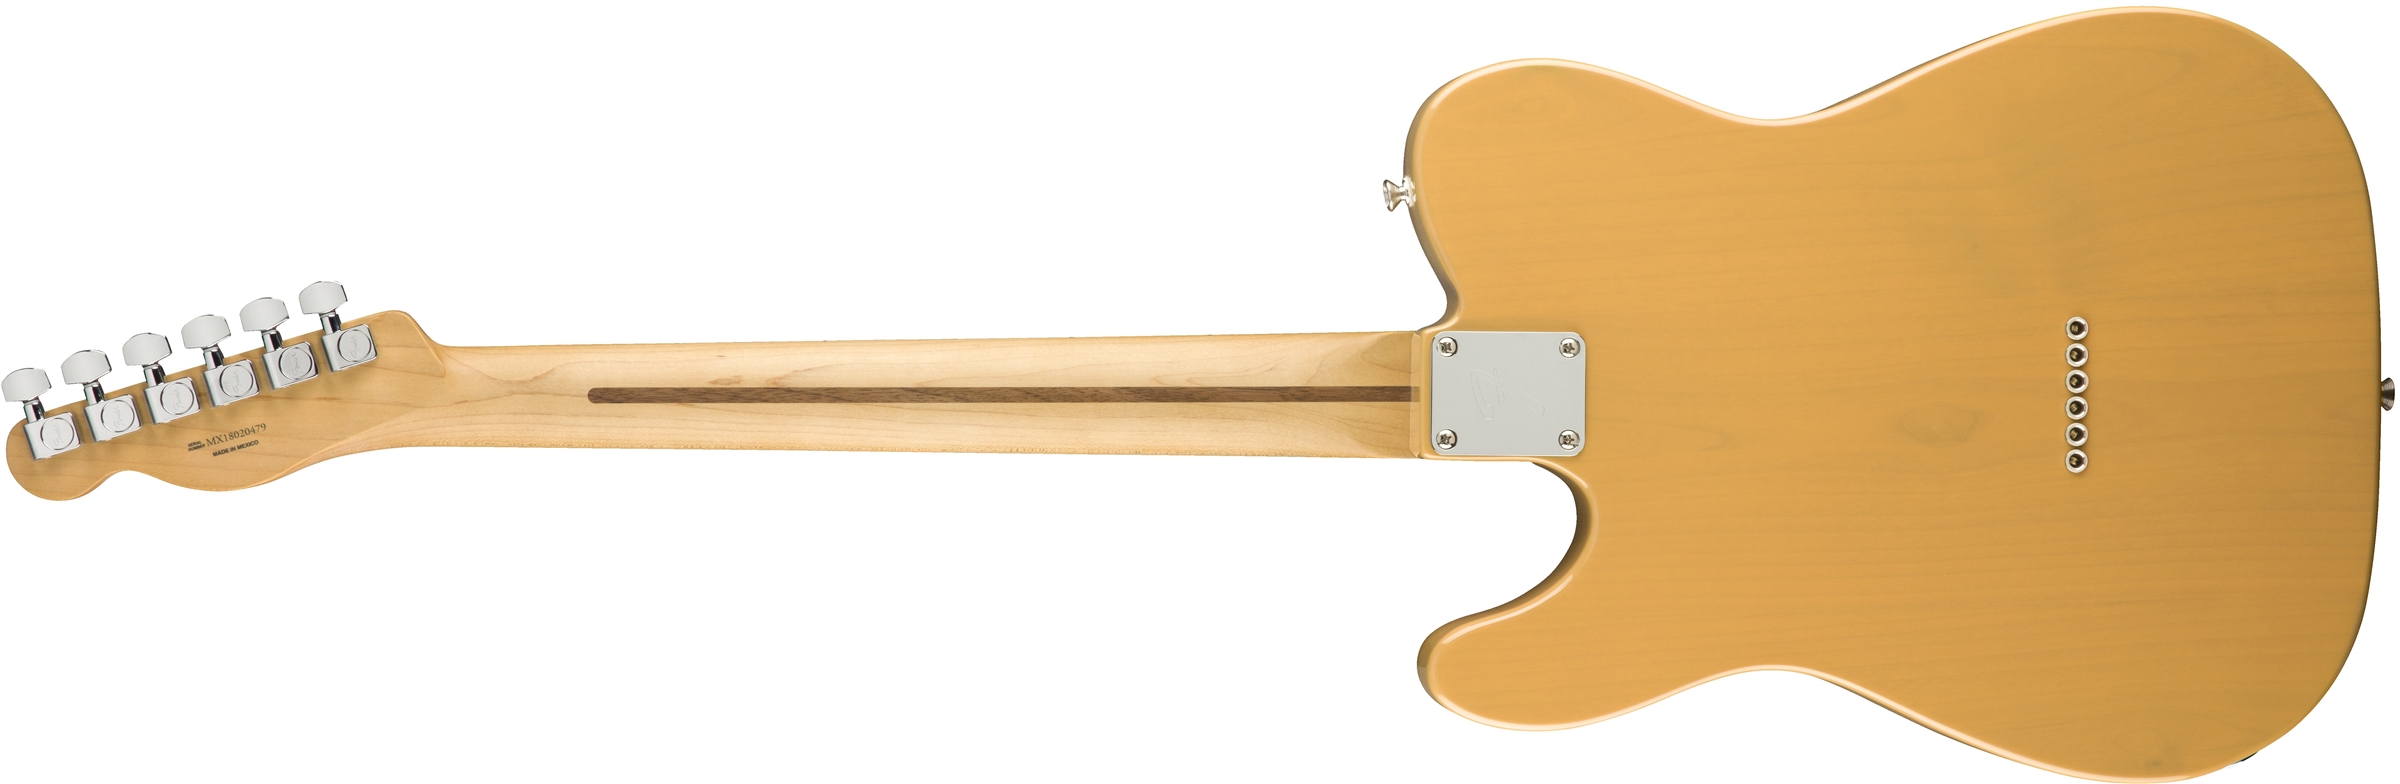 Fender Tele Player Mex Mn - Butterscotch Blonde - Guitarra eléctrica con forma de tel - Variation 2